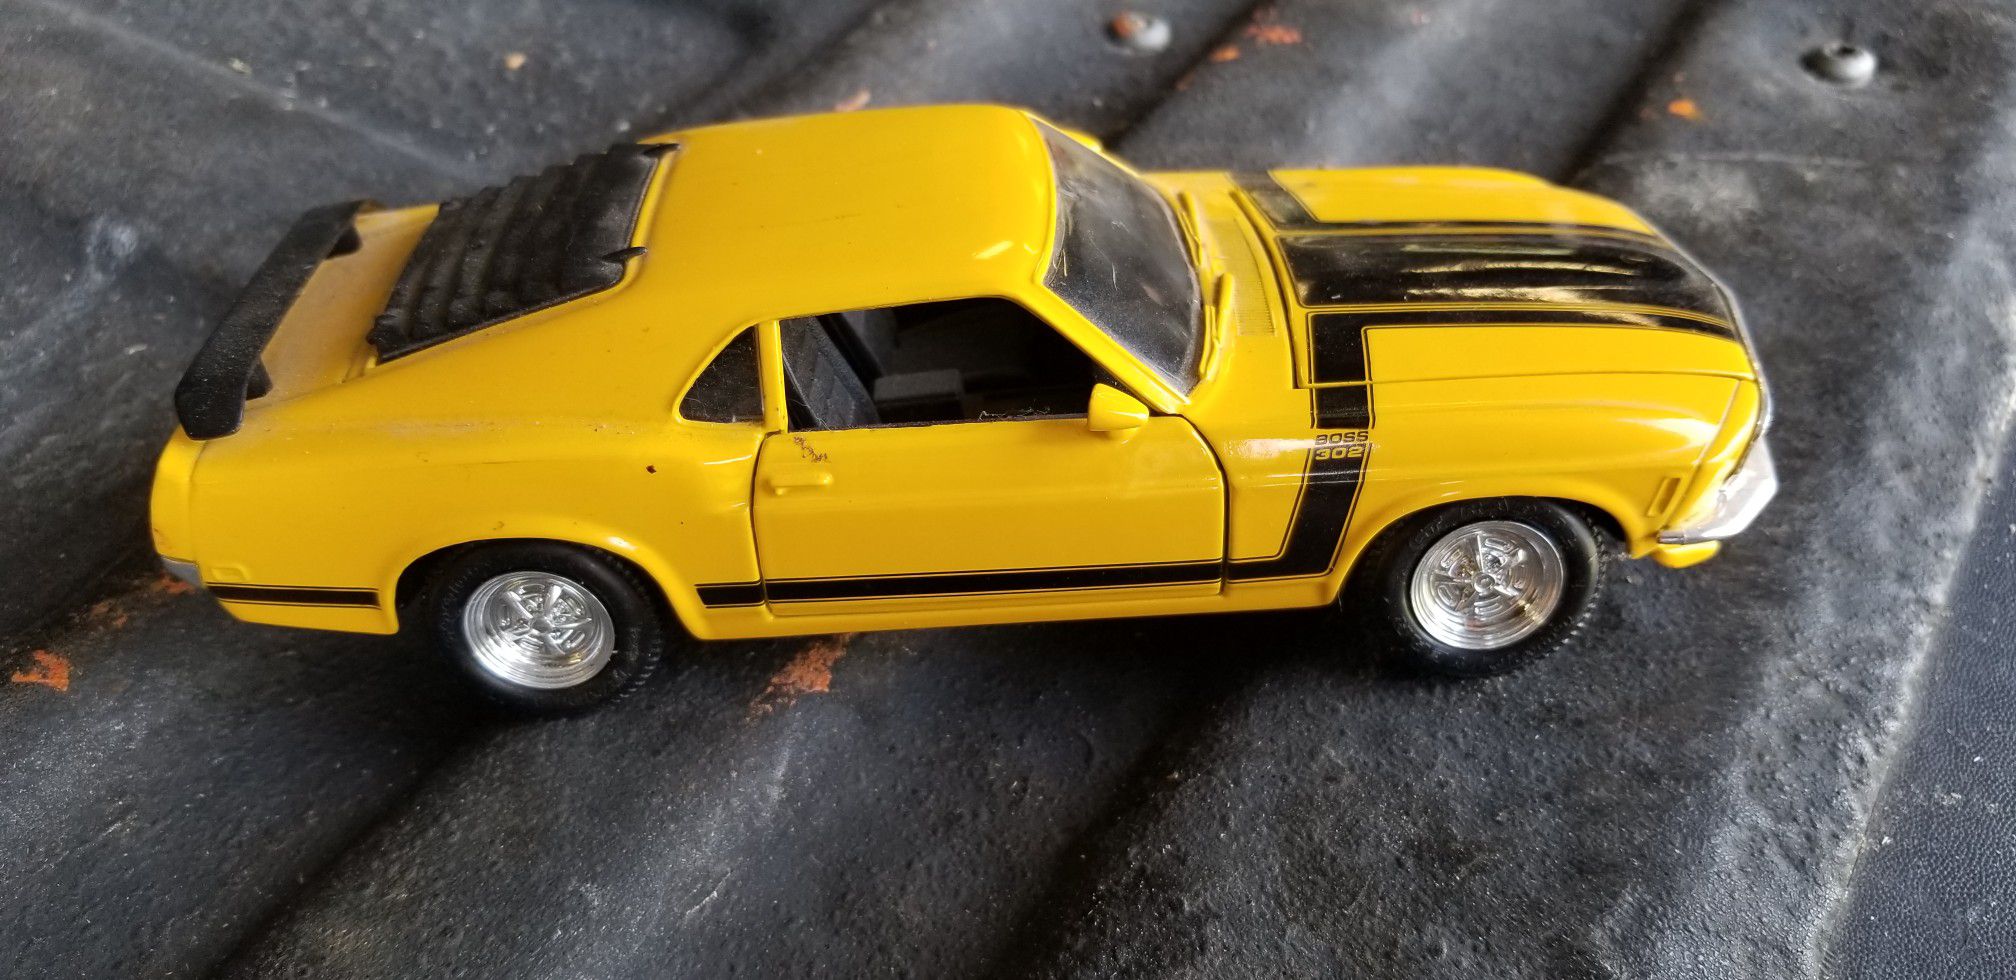 Mustang model